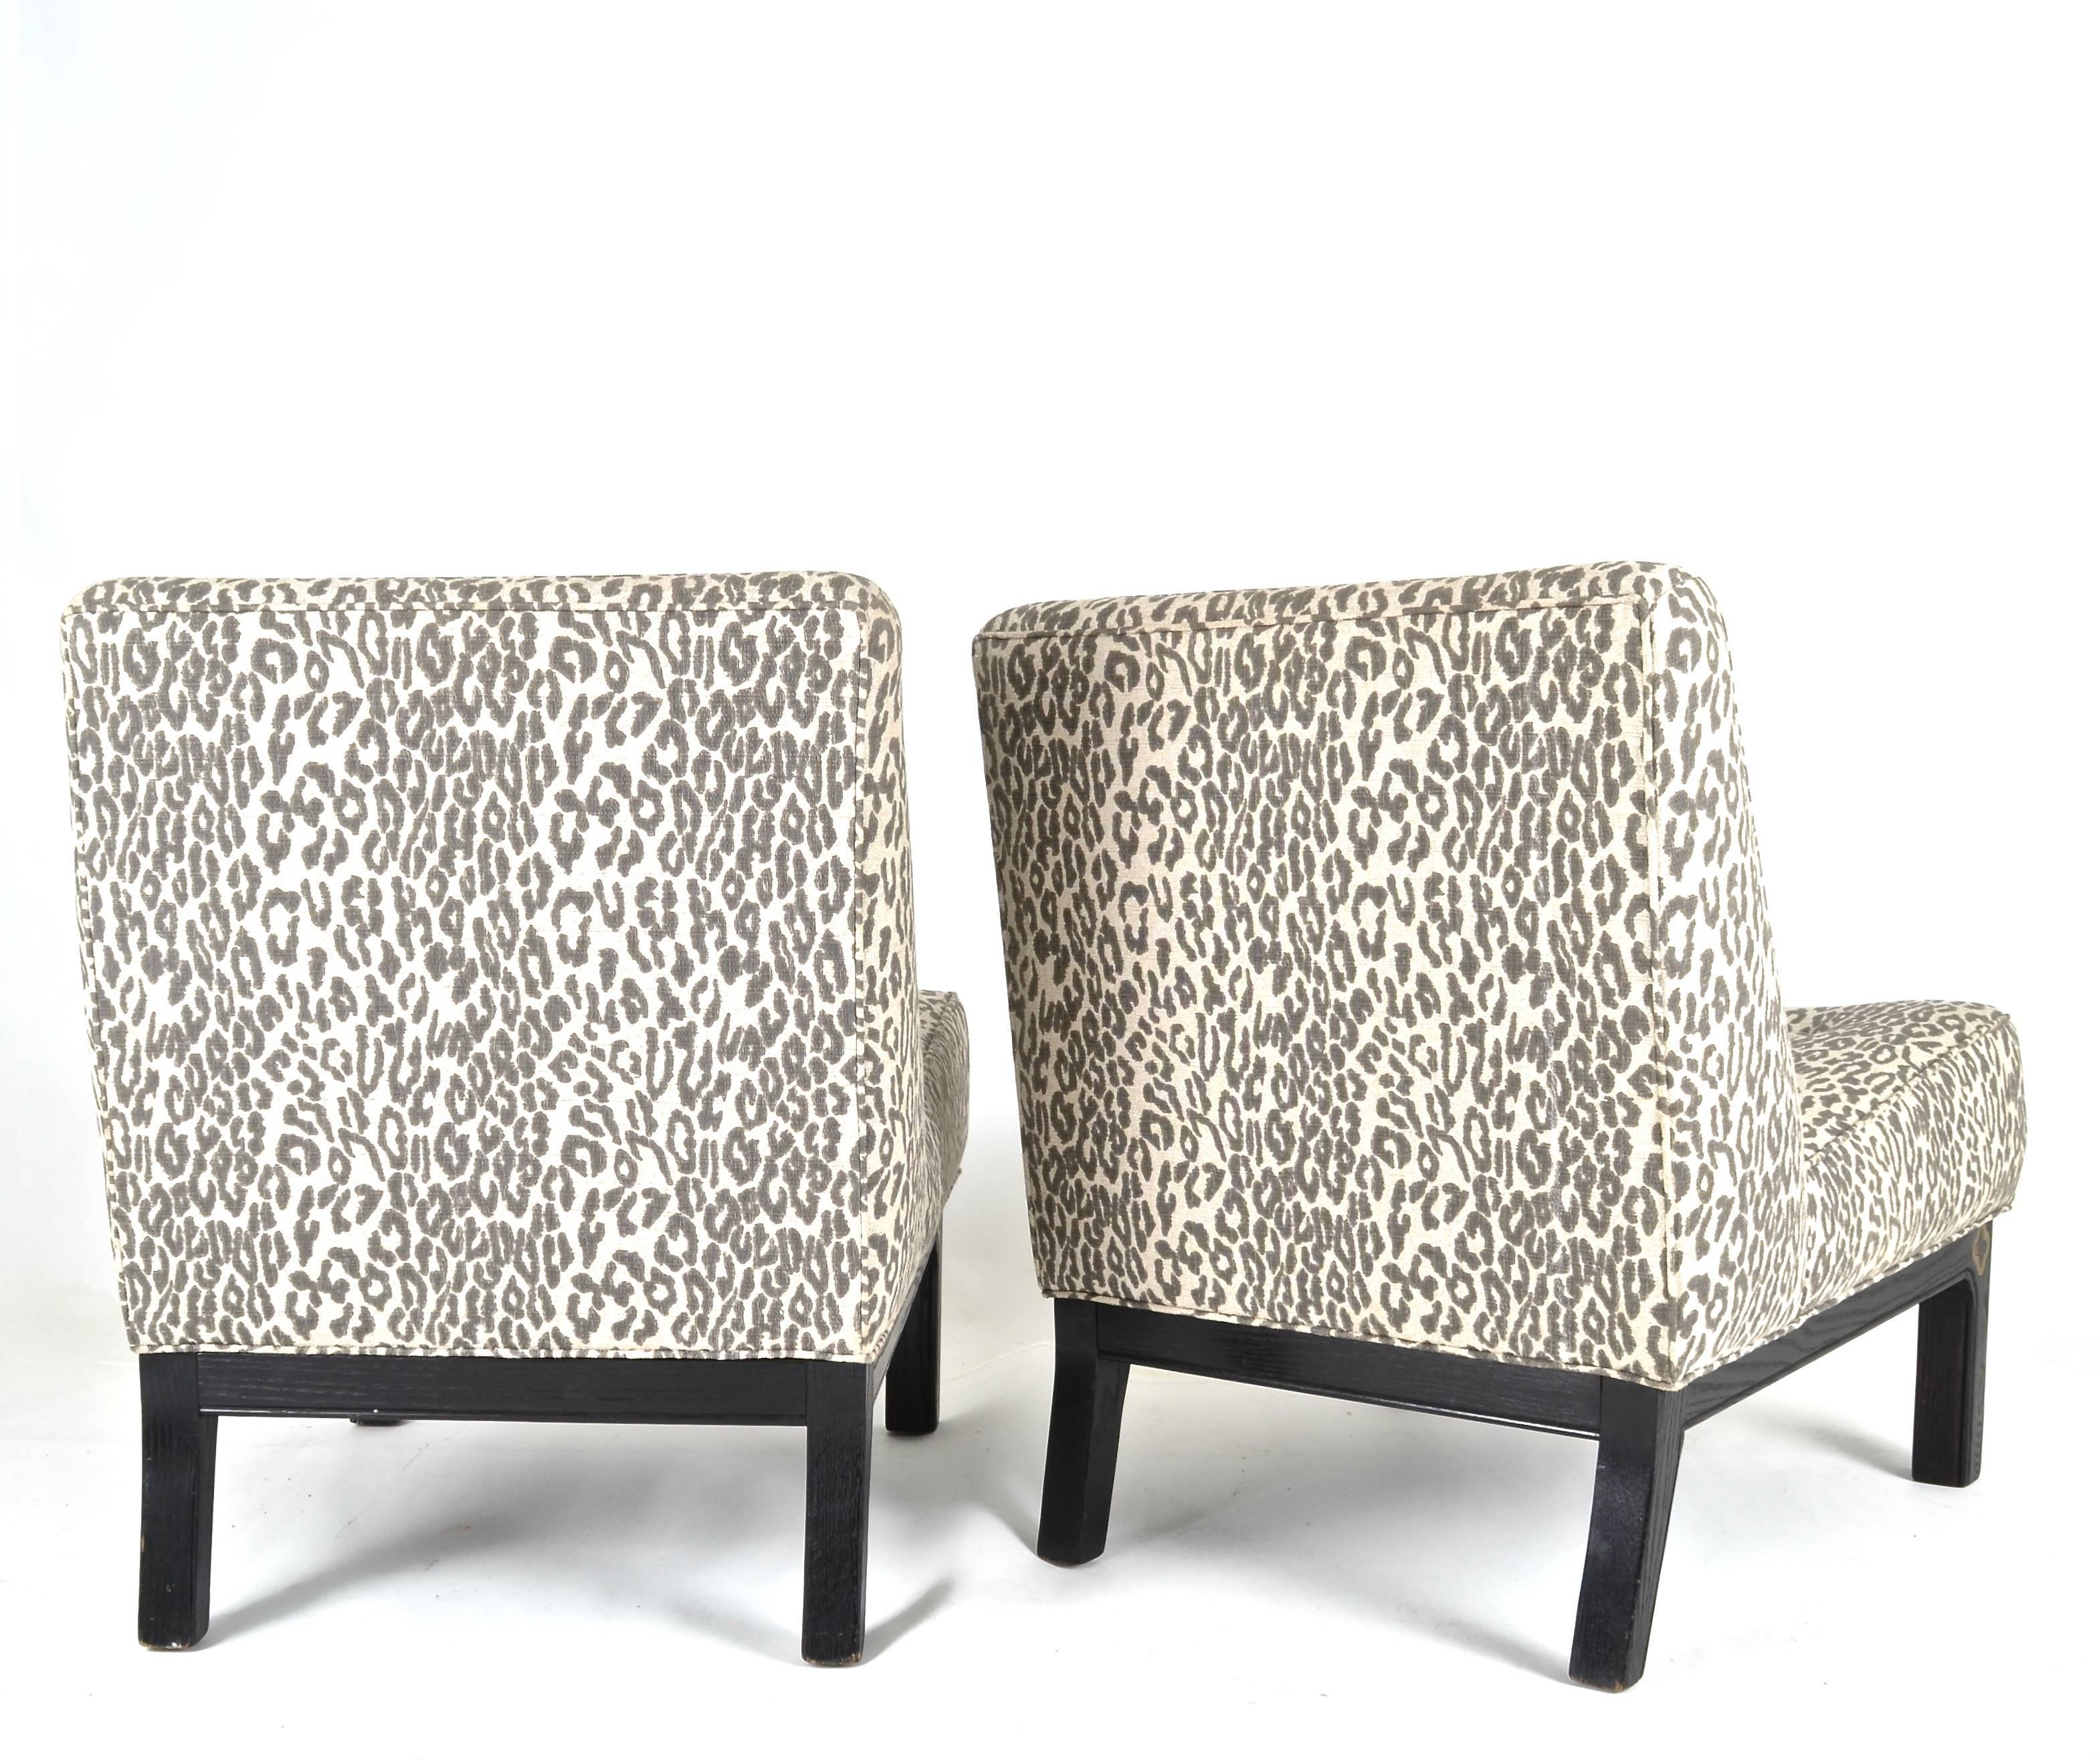 Mid-20th Century Pair of 1940s Modern Slipper Chairs